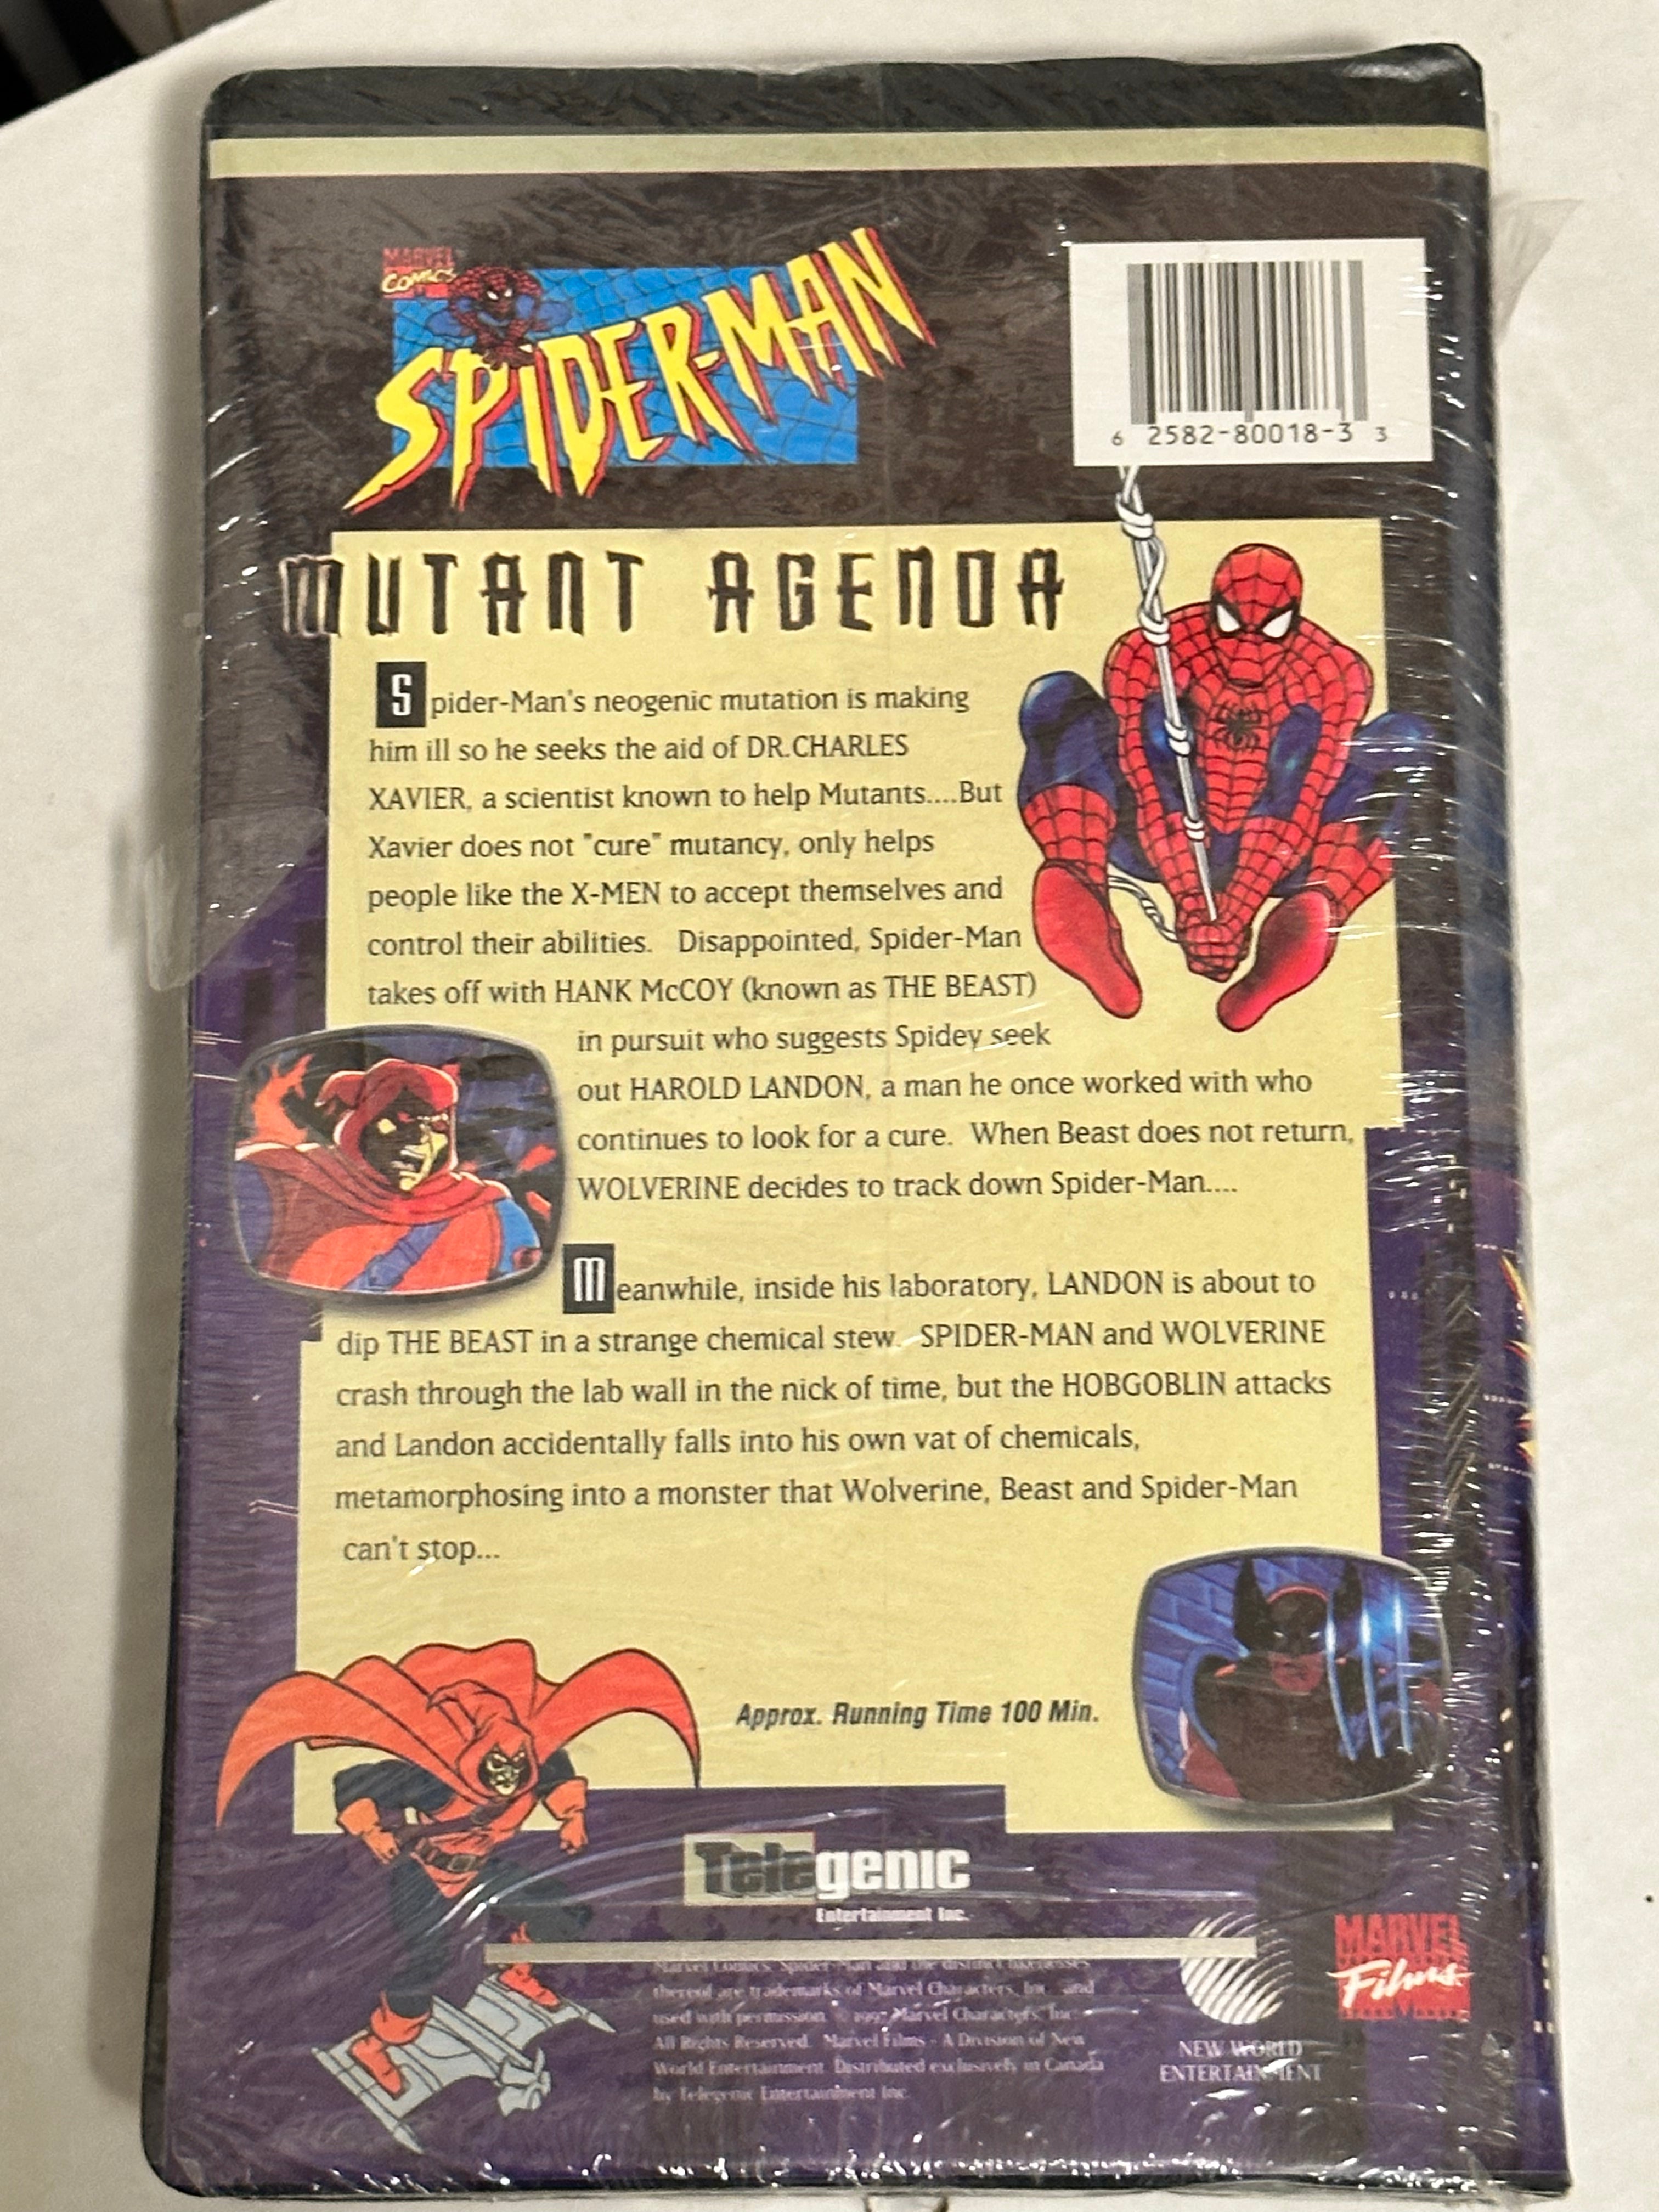 VHS Spider-Mutant agenda factory sealed 1997